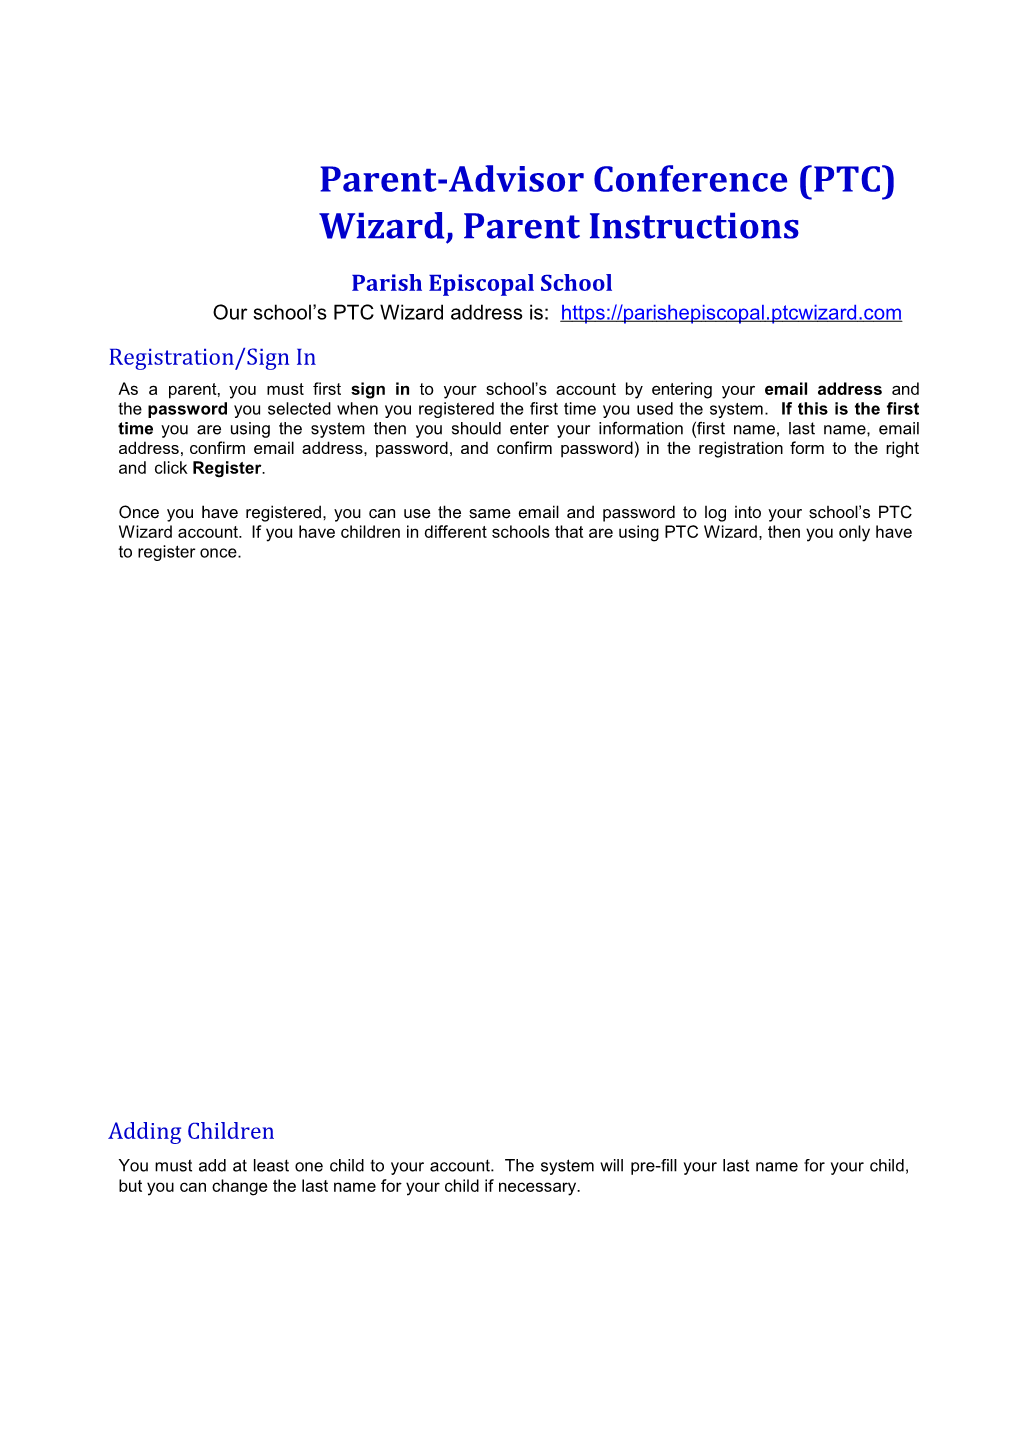 Wizard, Parent Instructions